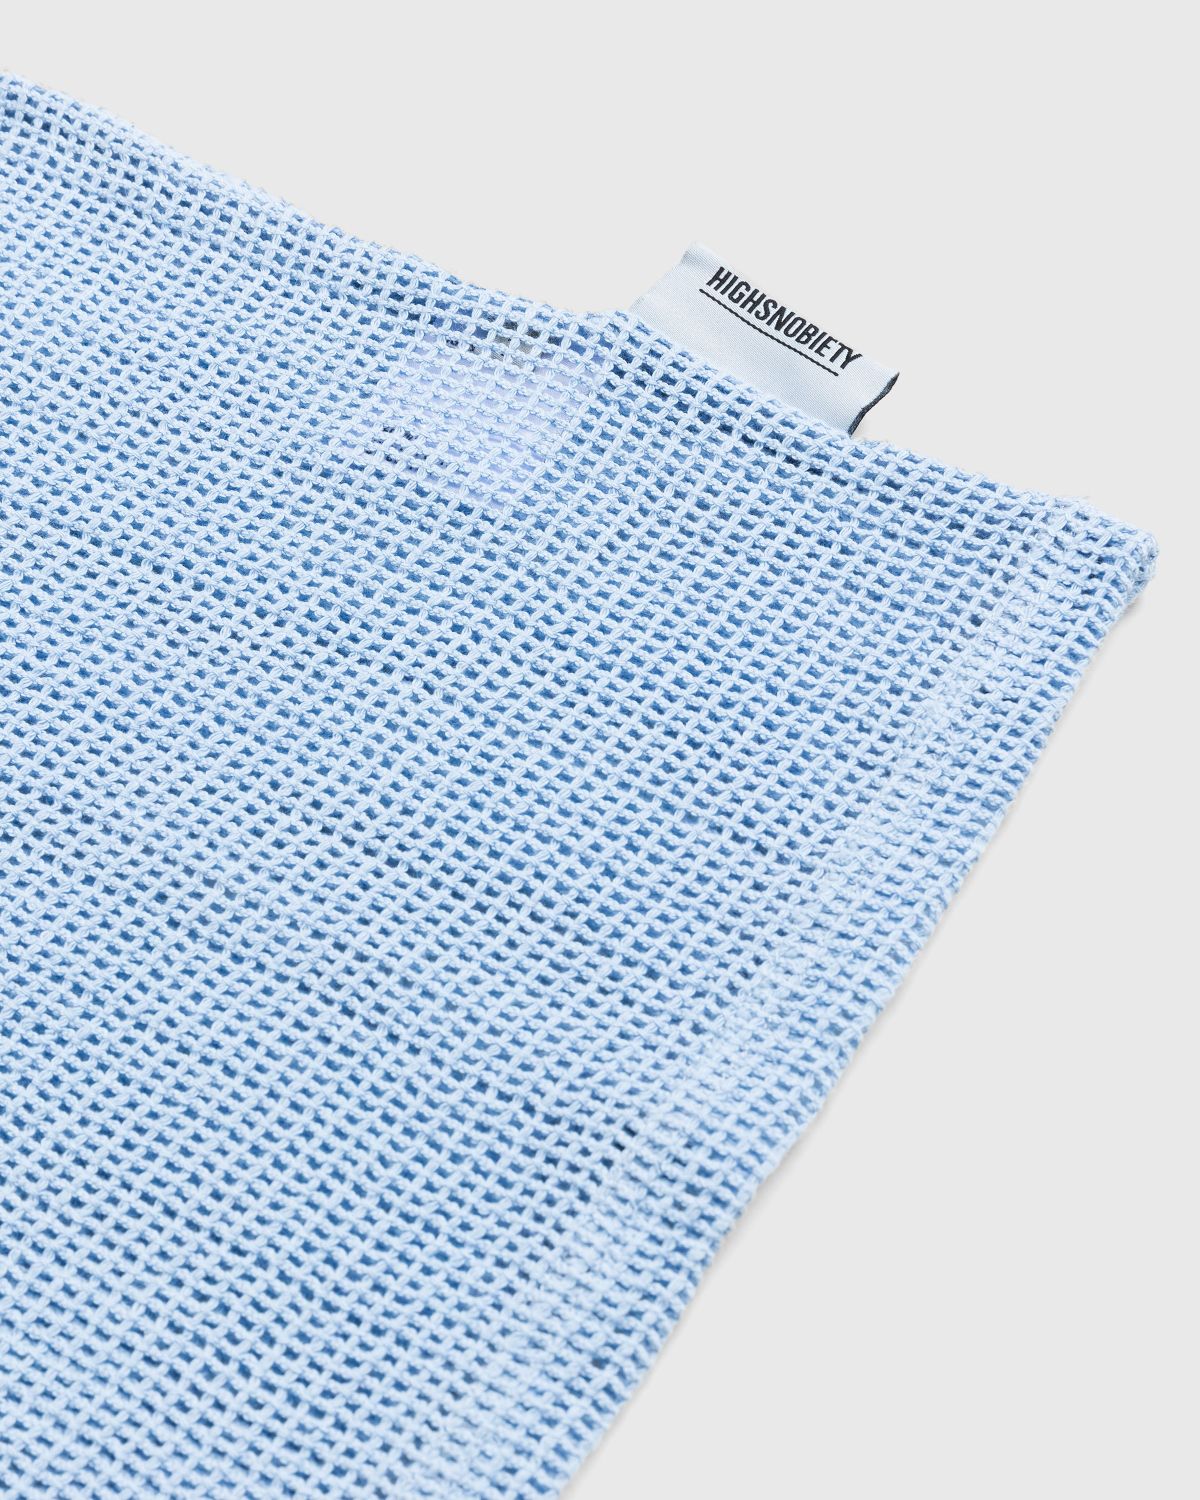 Highsnobiety – Cotton Mesh Knit Tank Top Blue - Tops - Blue - Image 7